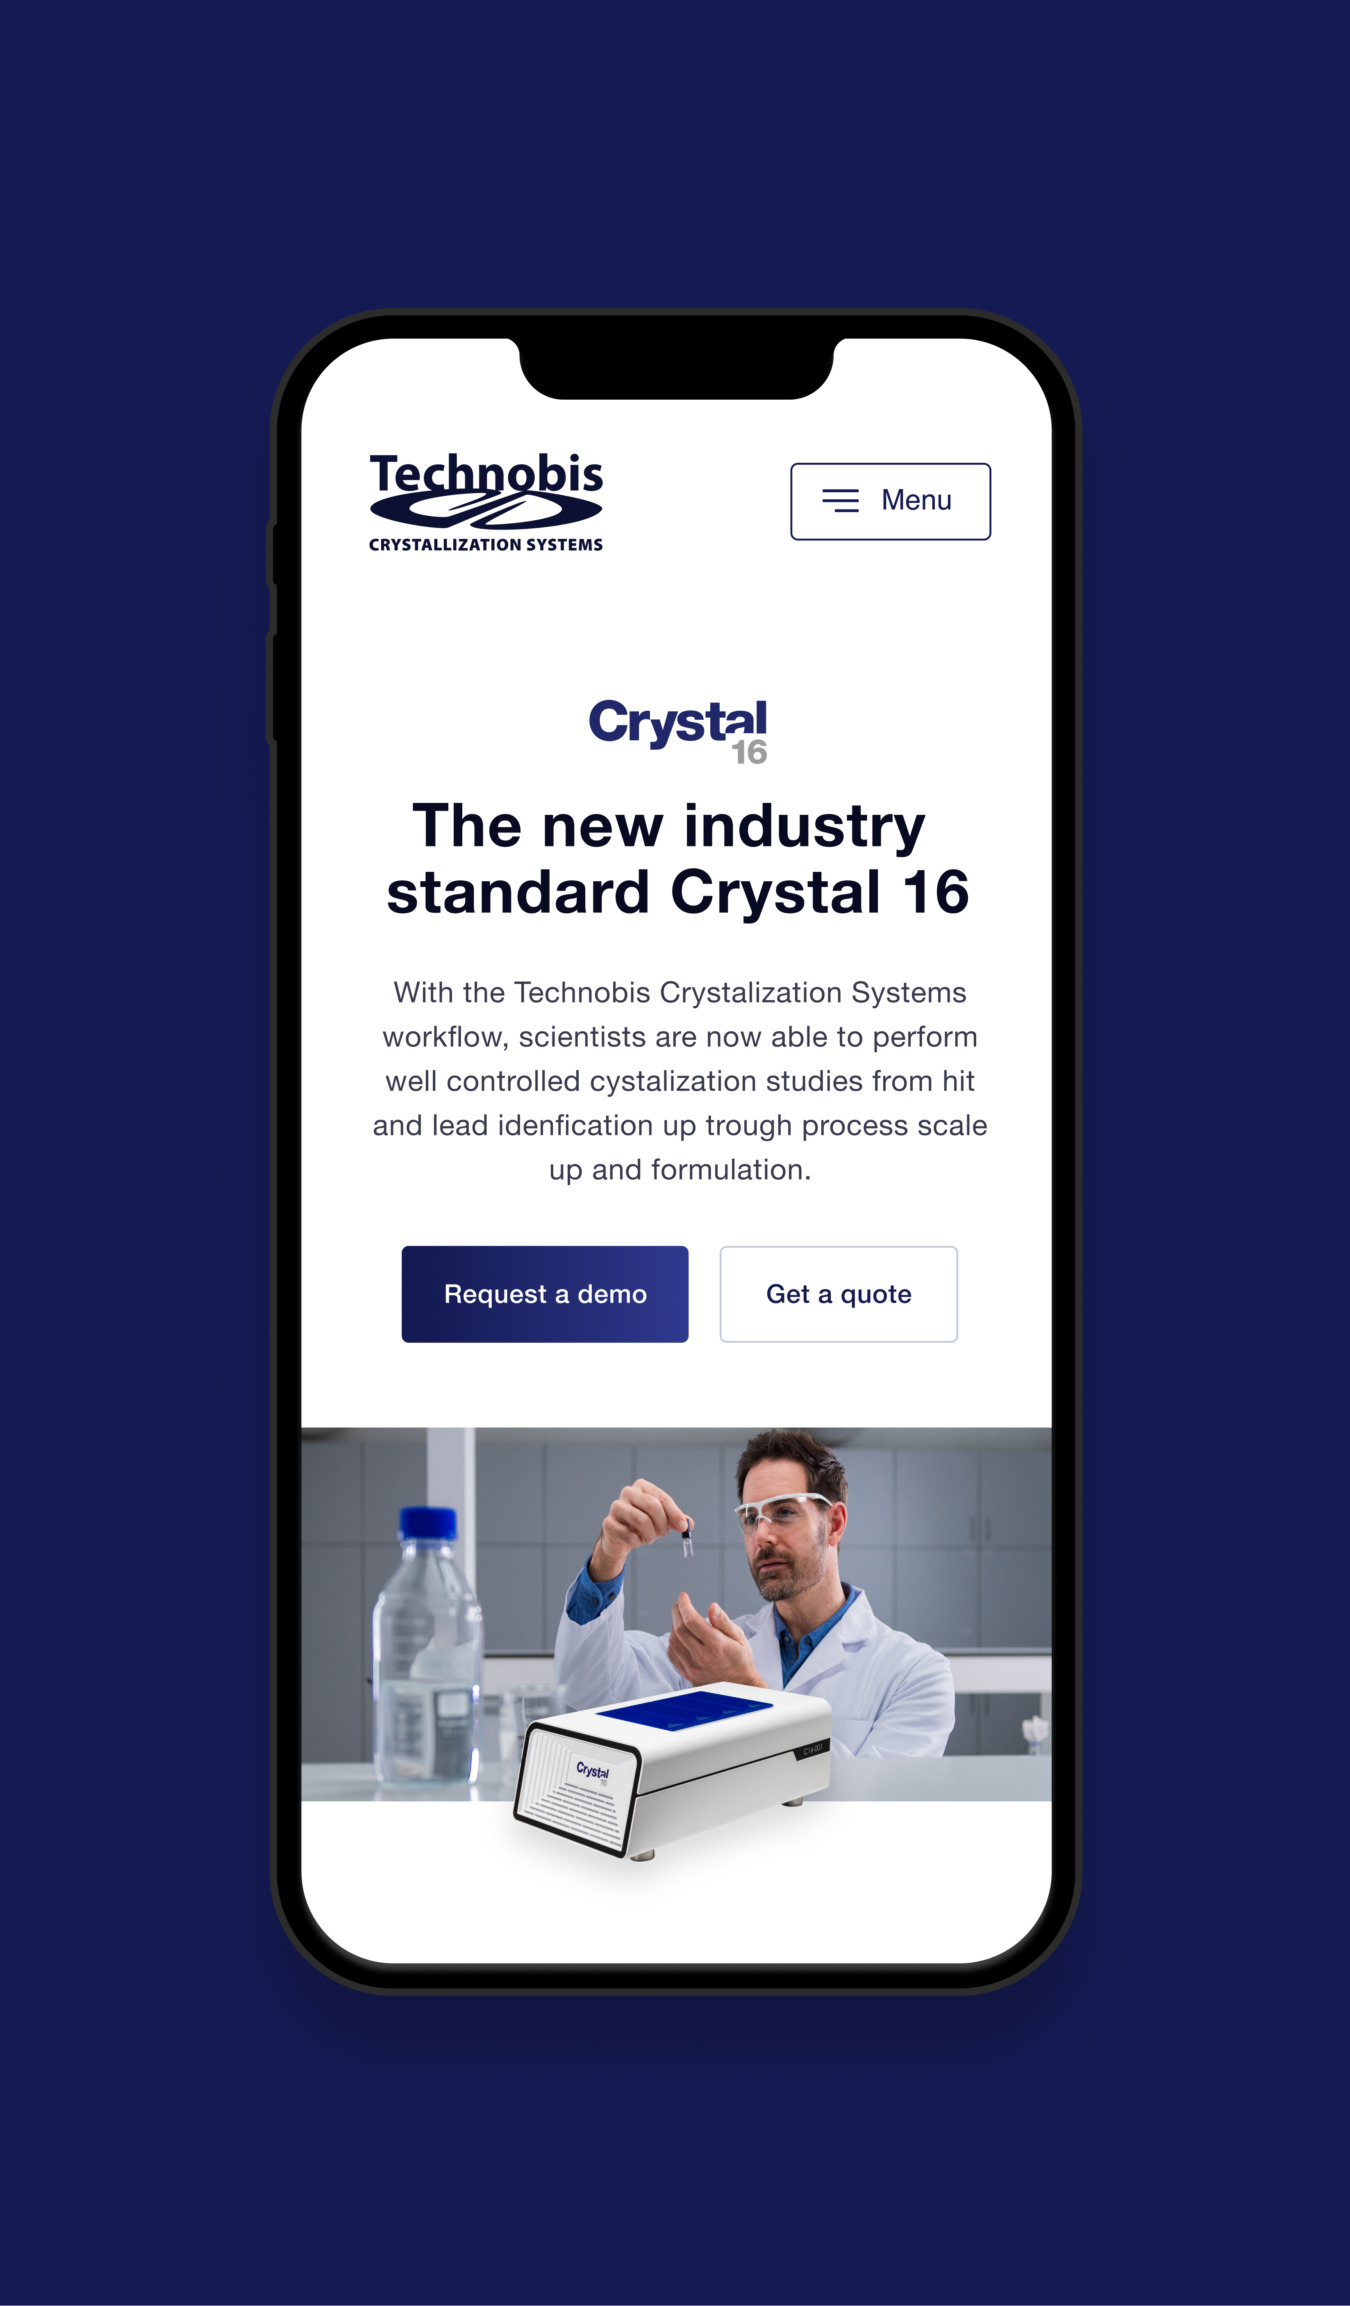 Productpagina Crystal16 op mobiel voor Technobis Crystallization Systems